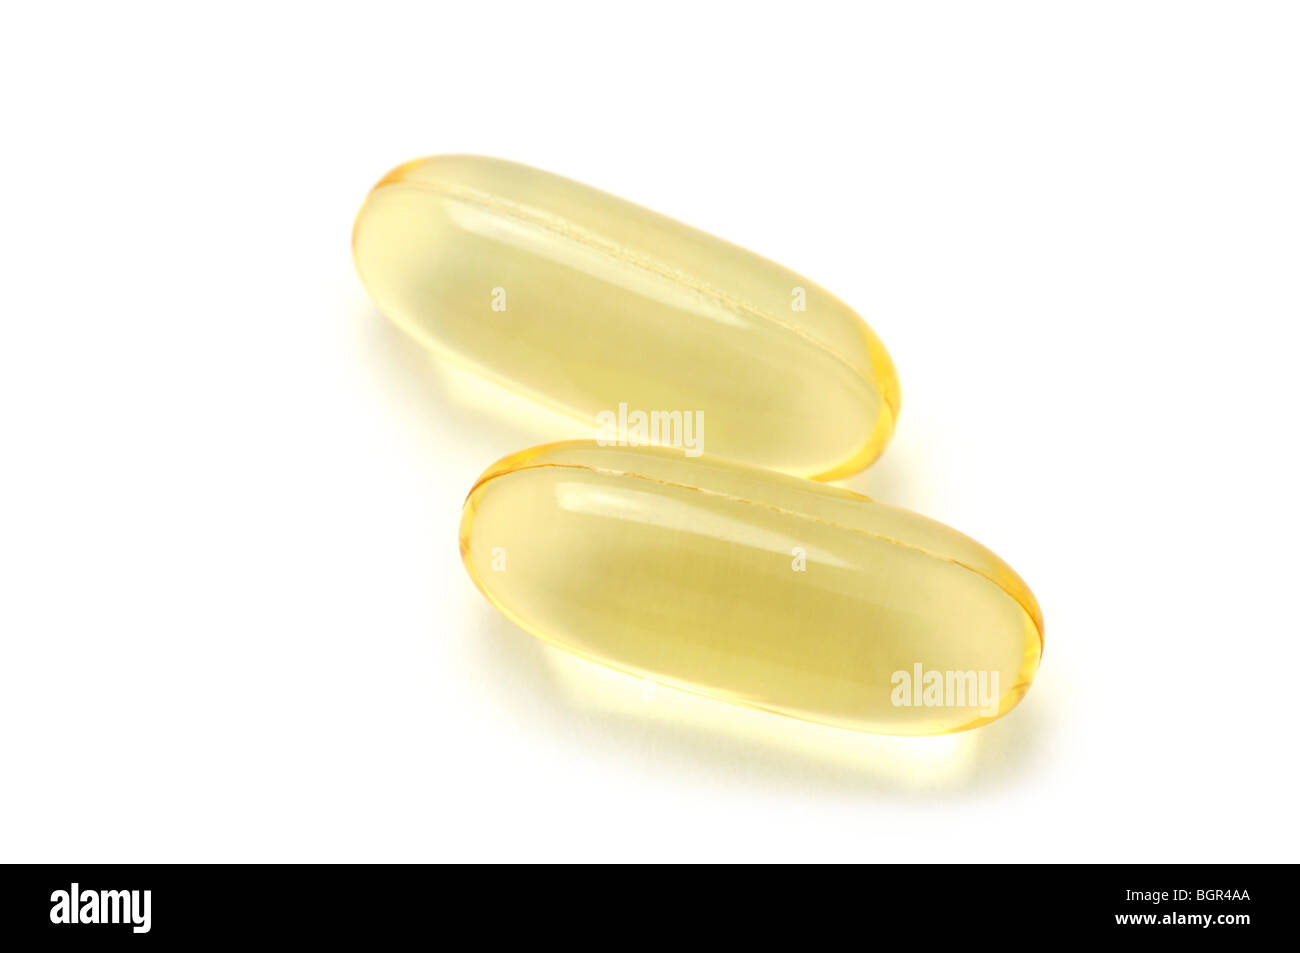 Omega 3 Supplement Capsules Stock Photo